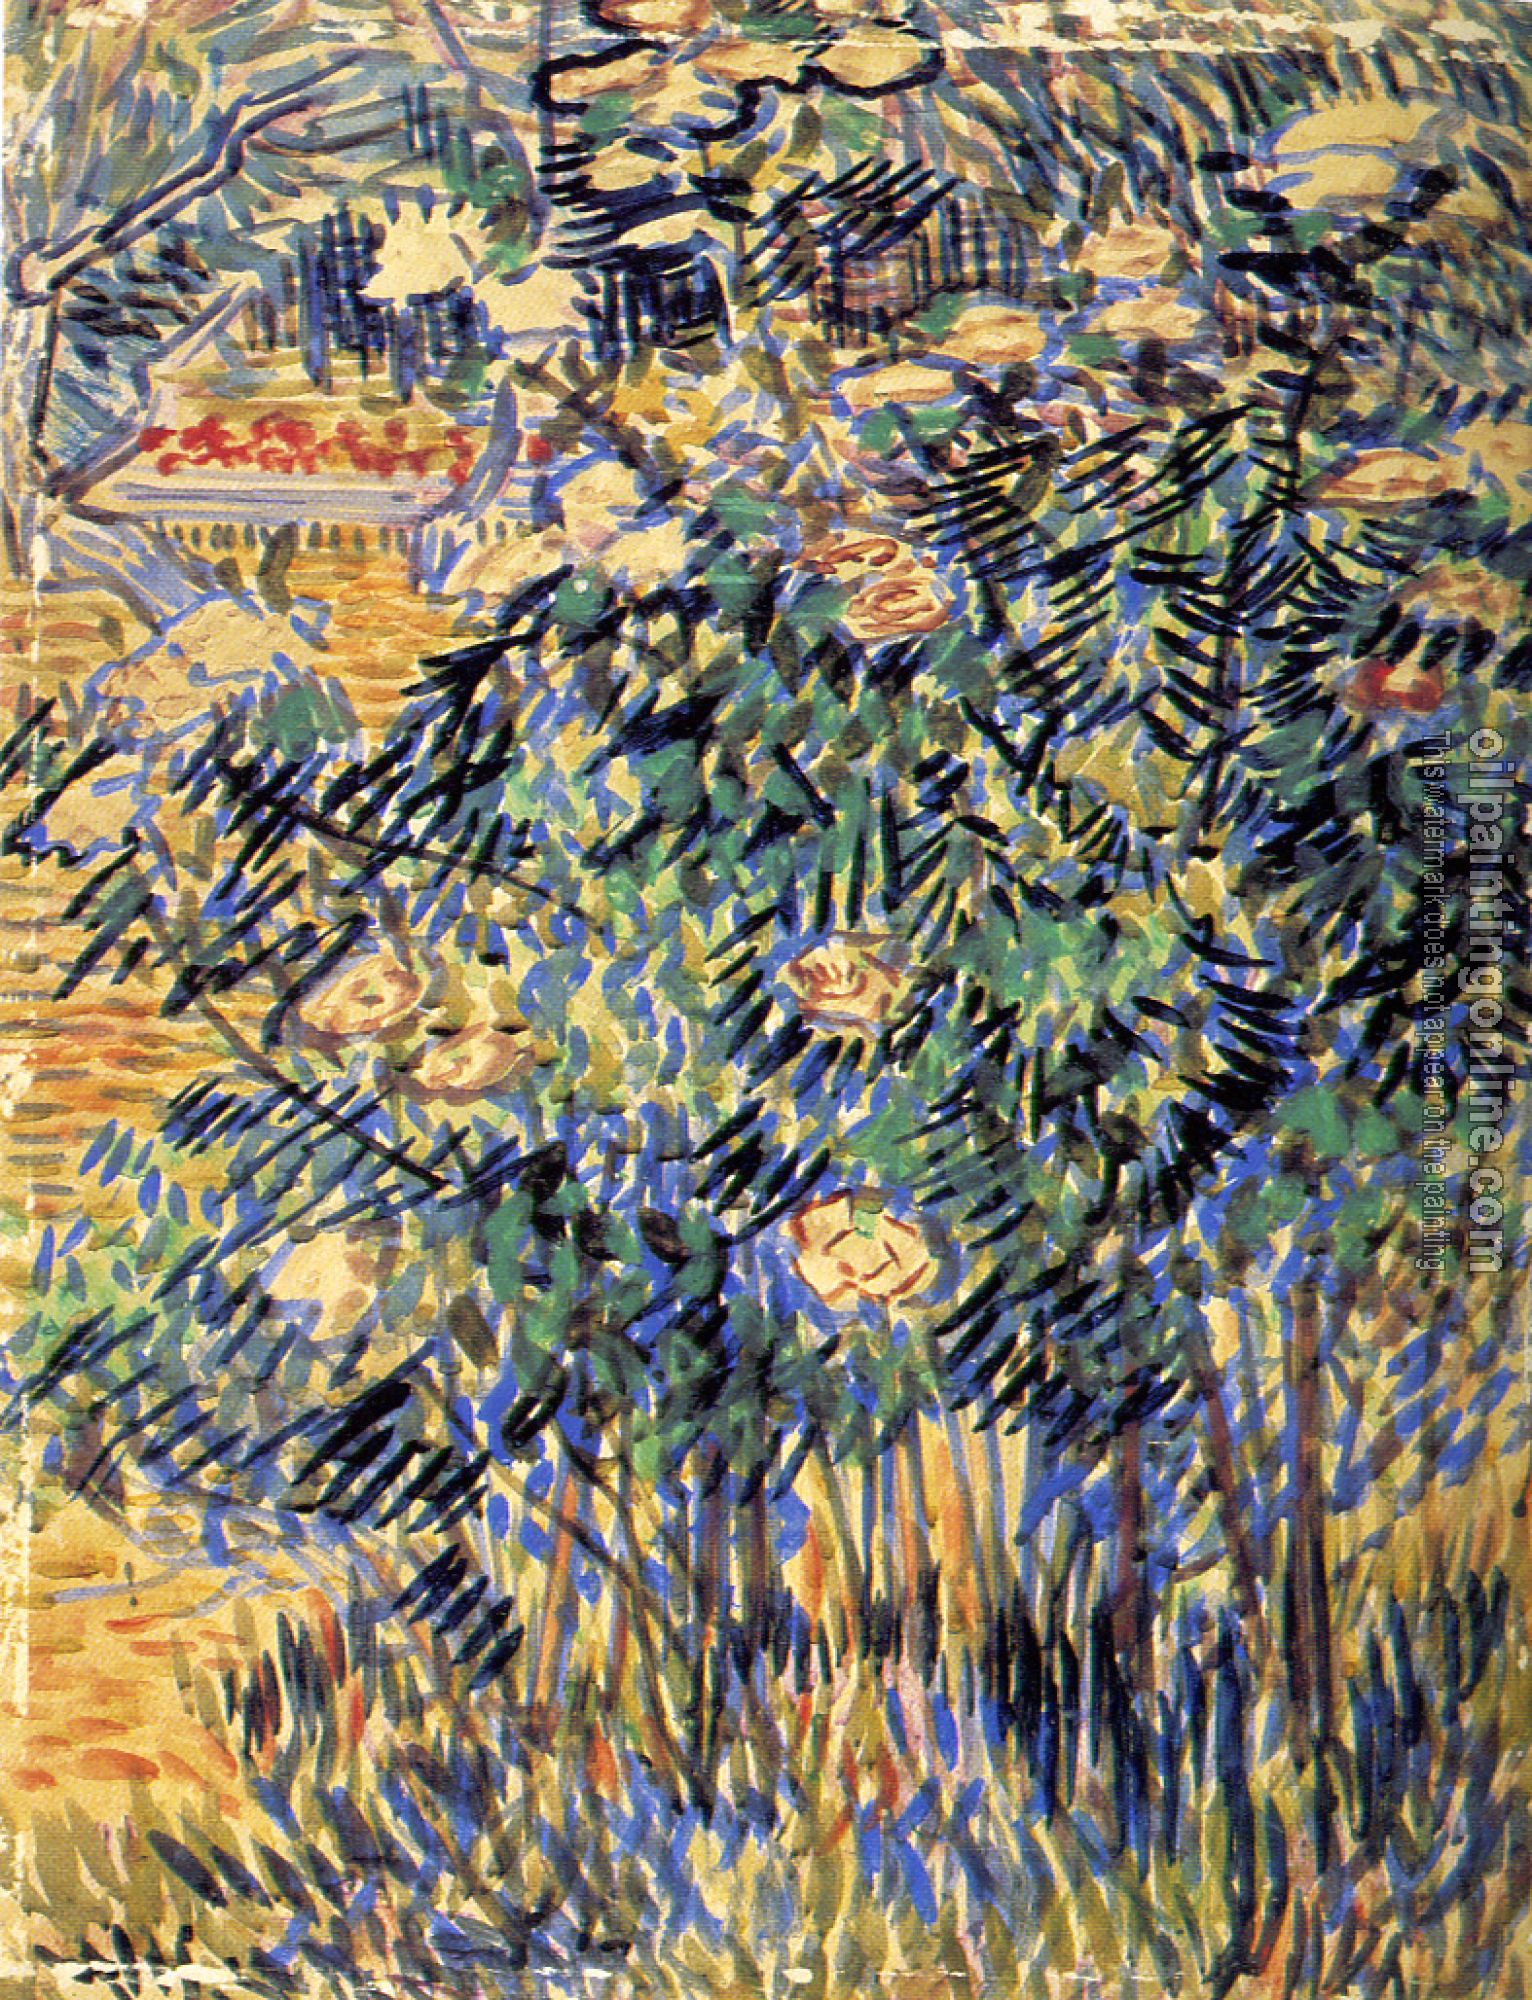 Gogh, Vincent van - Flowering Shrubs